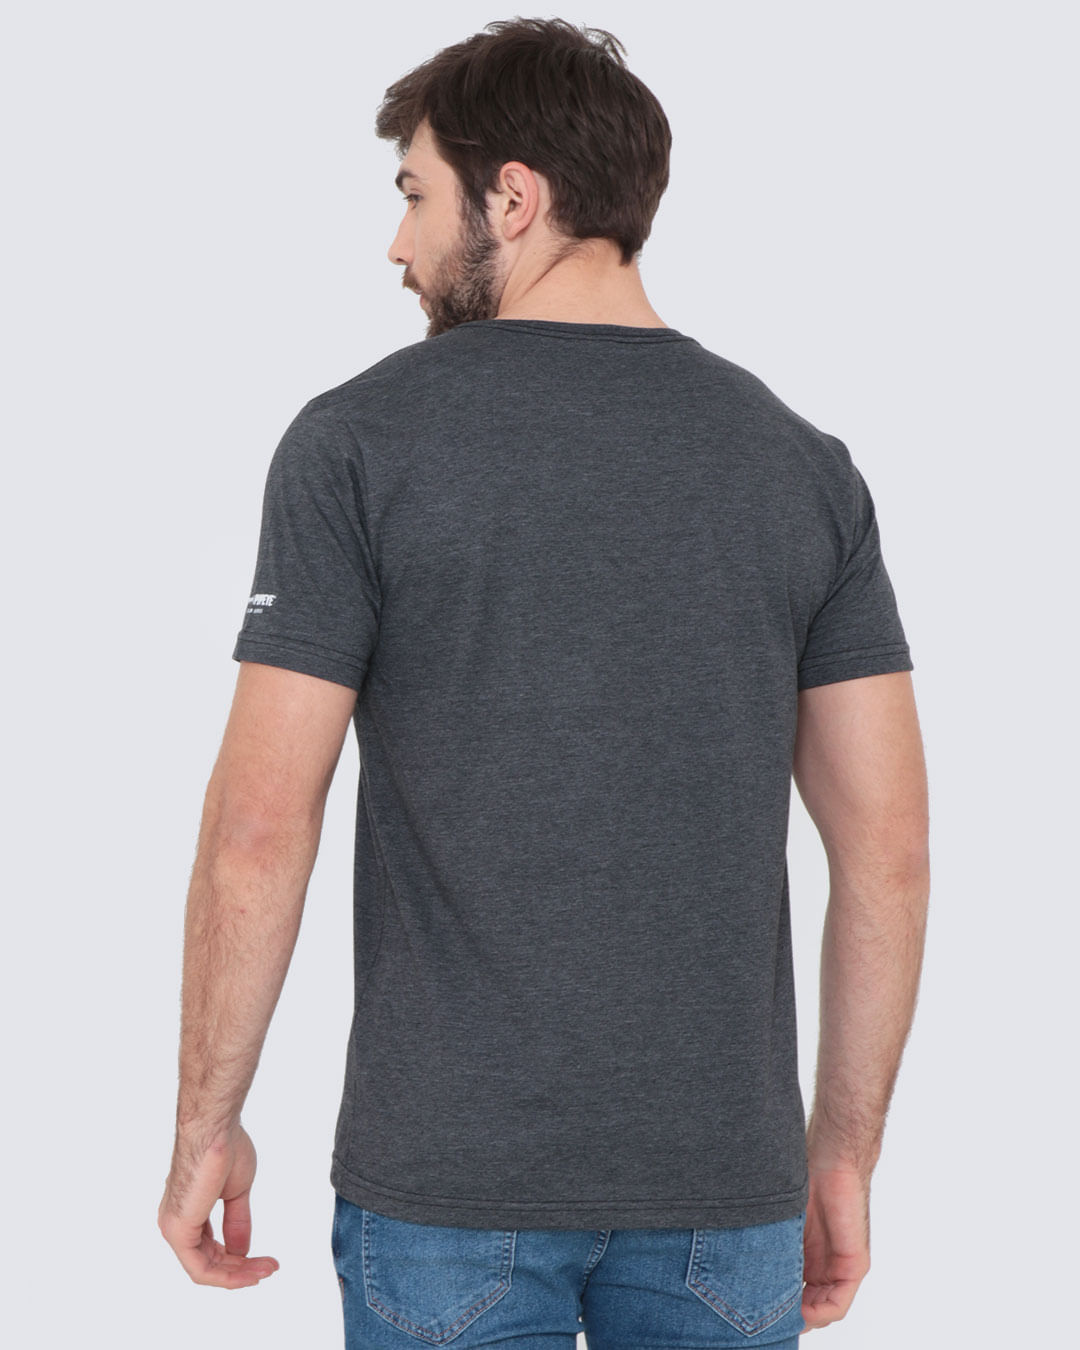 Camiseta-Masculina-Estampa-Popeye-Mescla-Cinza-Escuro